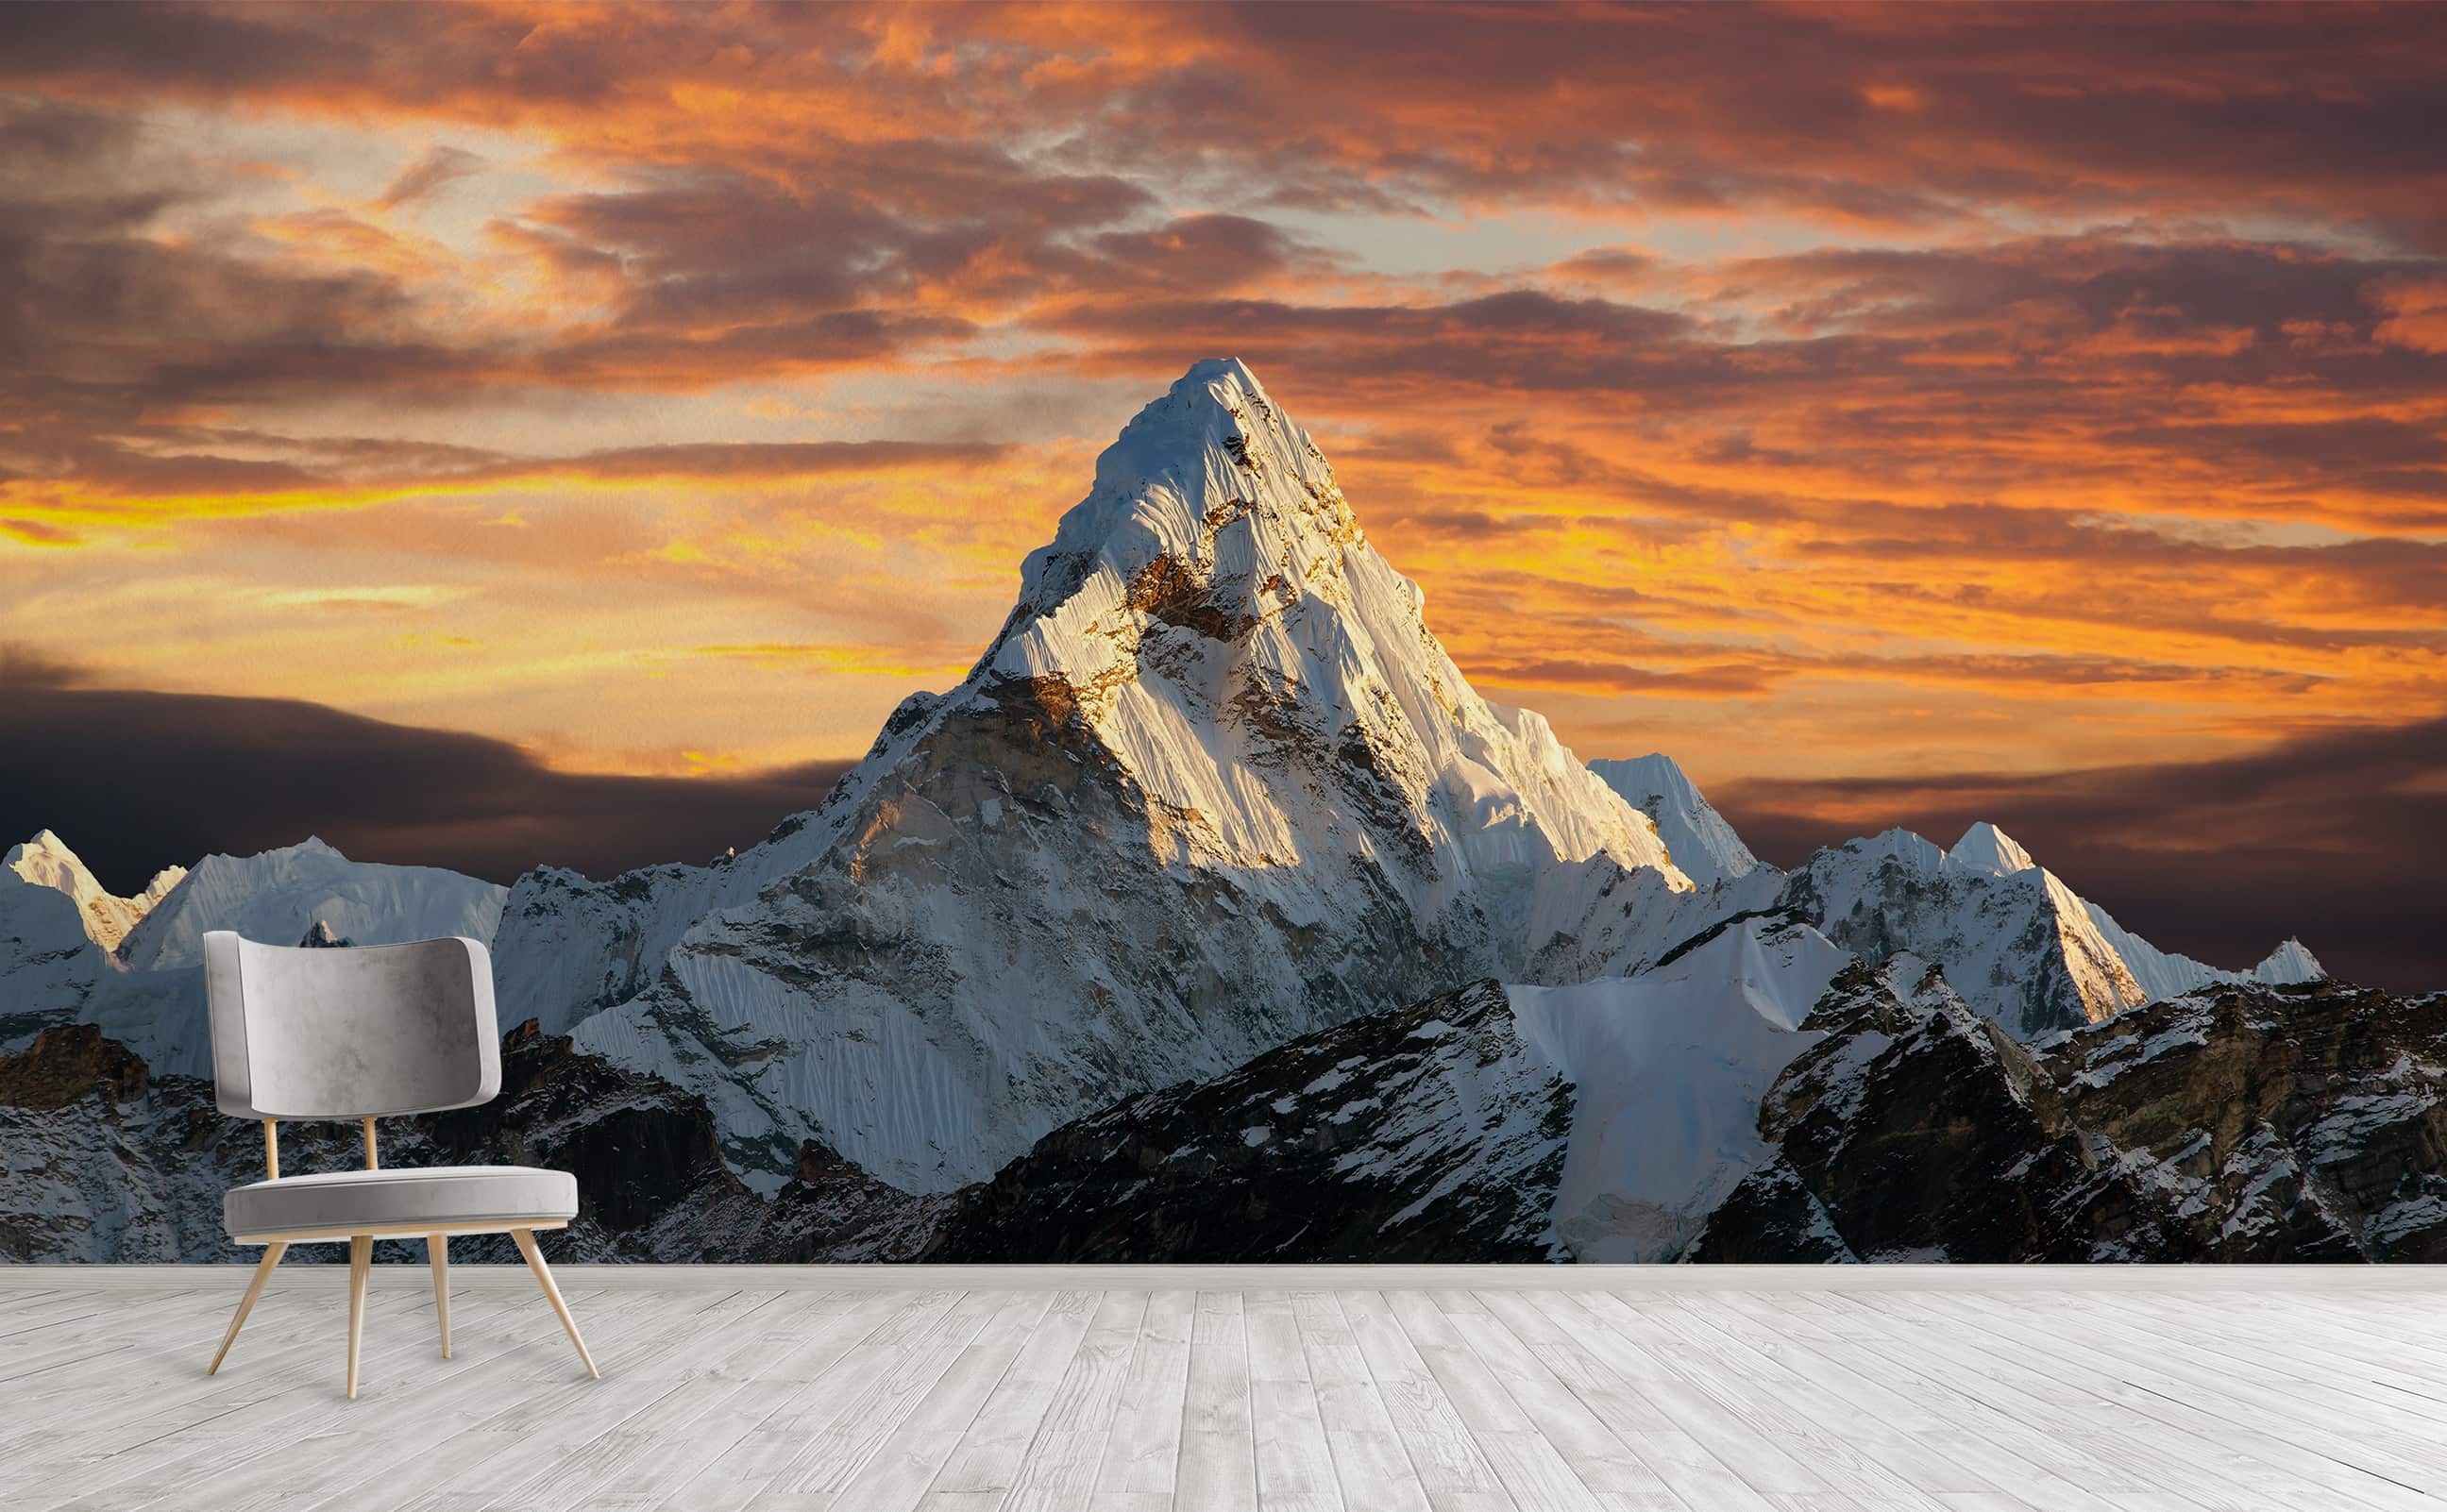 71+] Mt Everest Wallpaper - WallpaperSafari